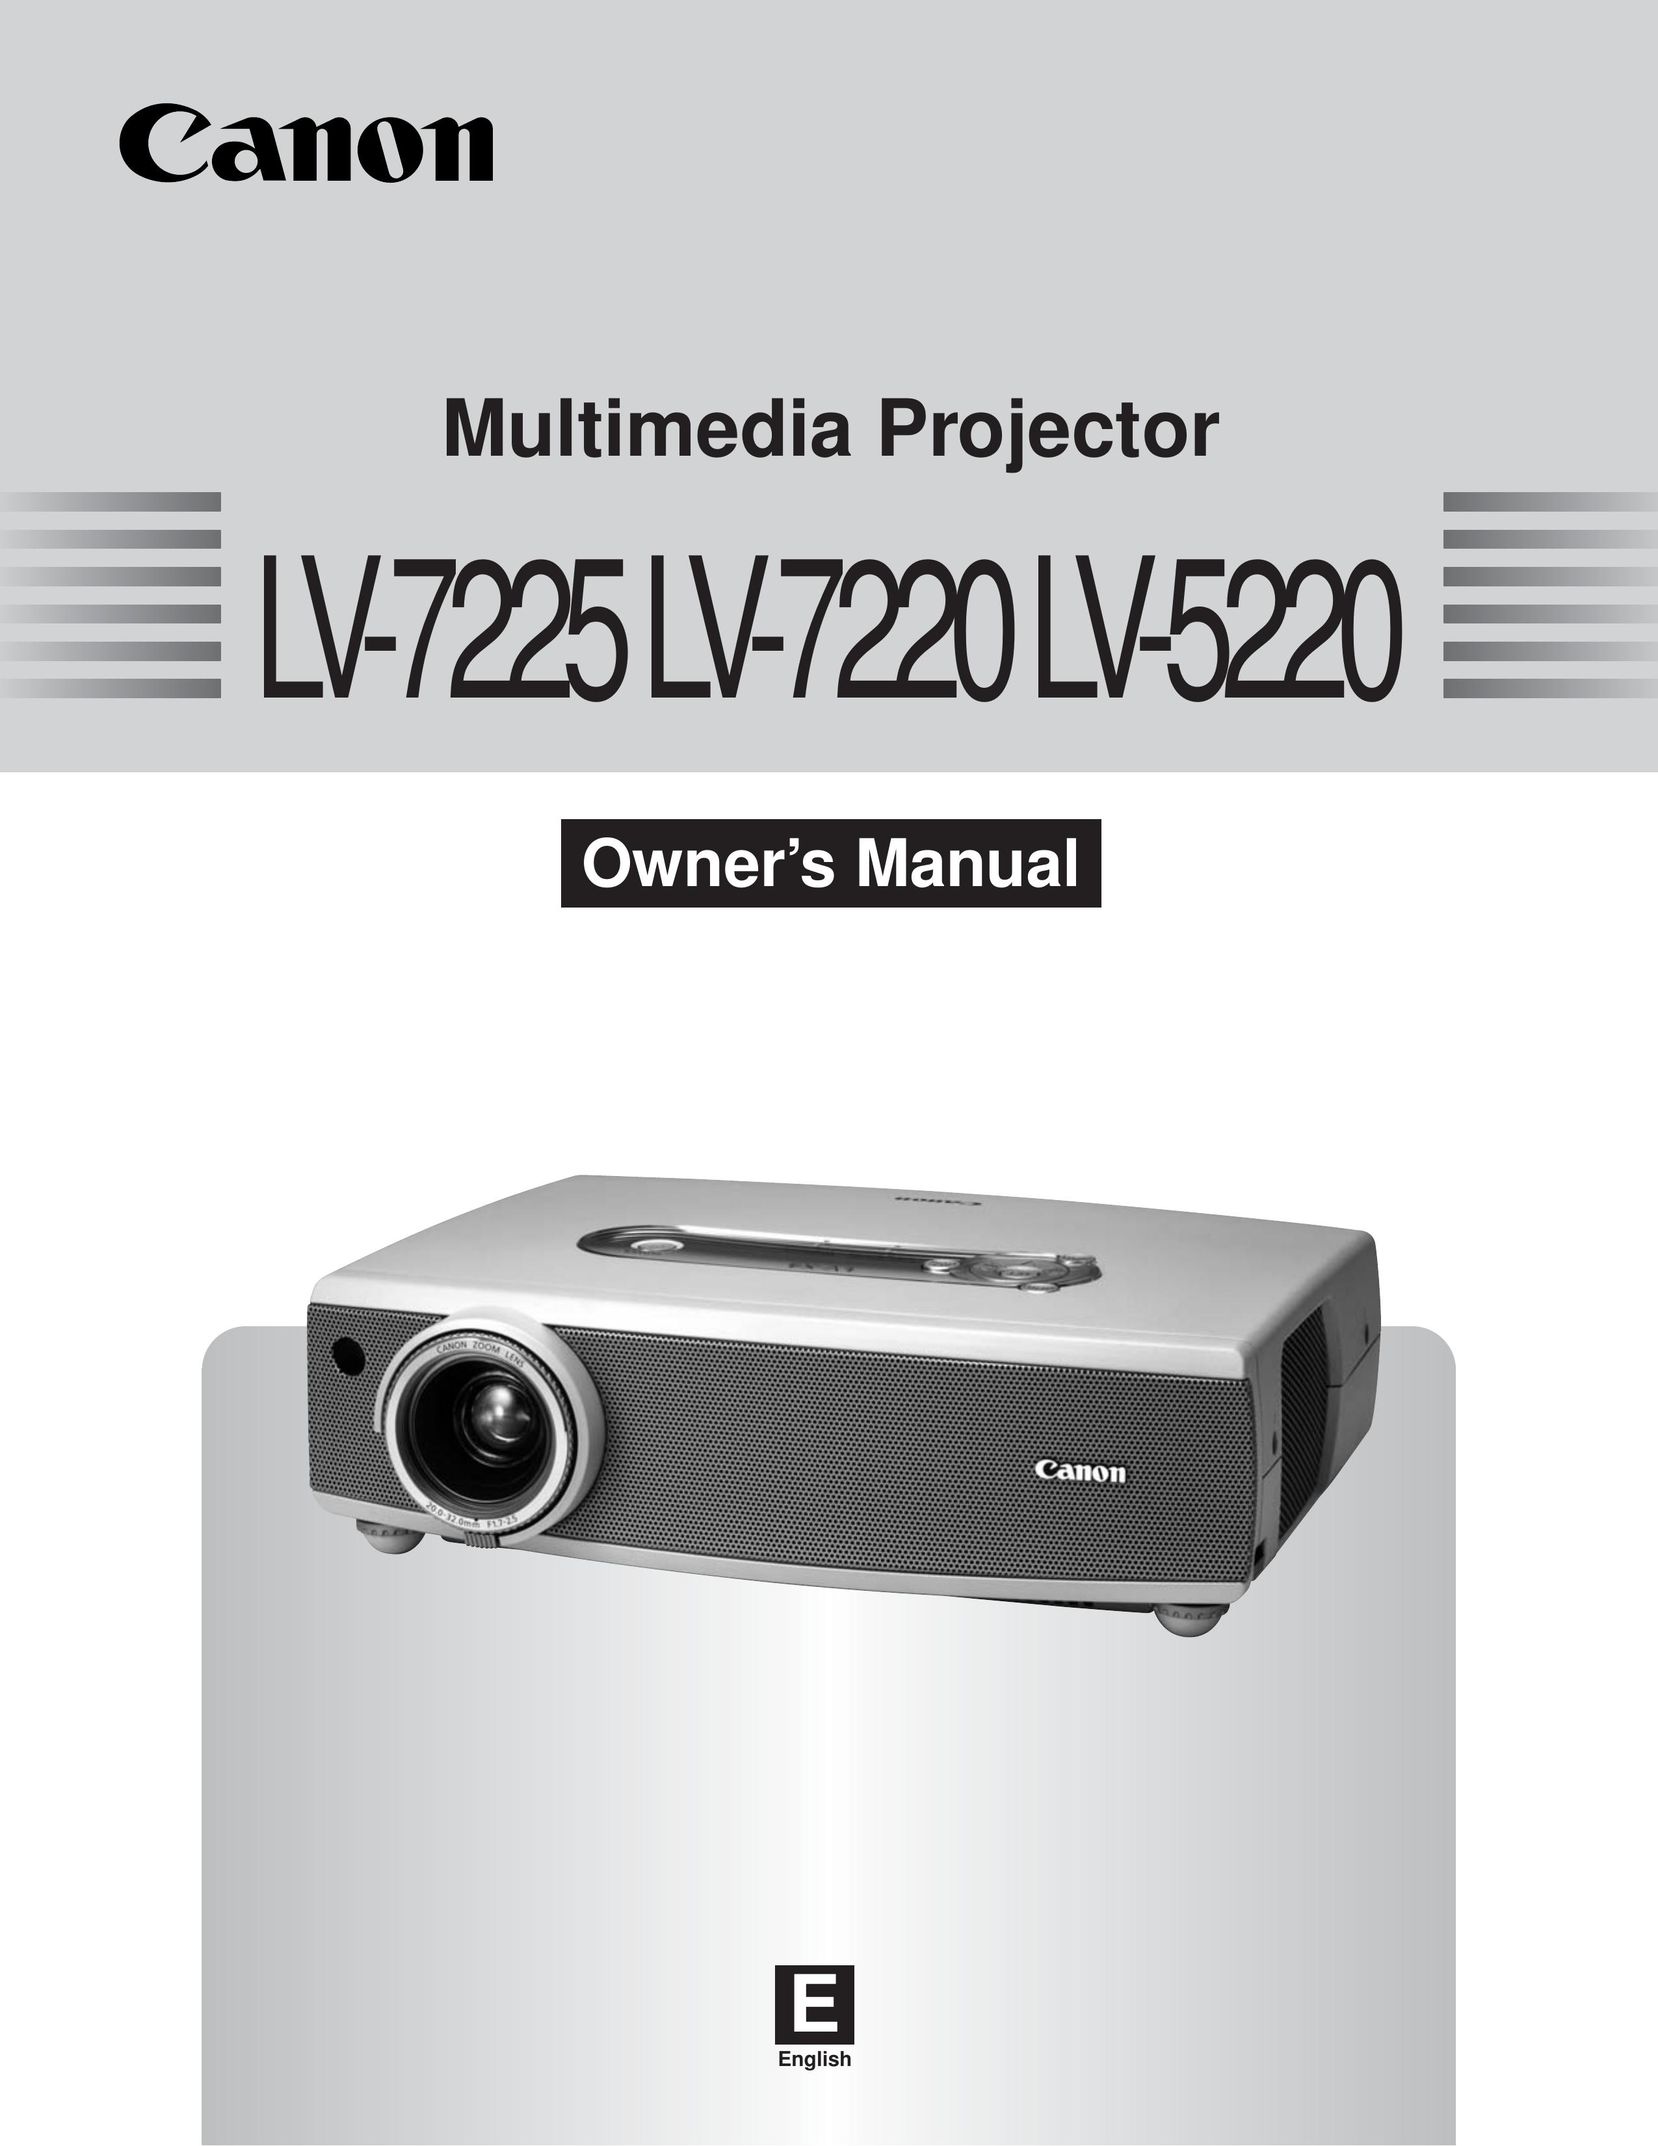 Canon LV-7220 Projector User Manual